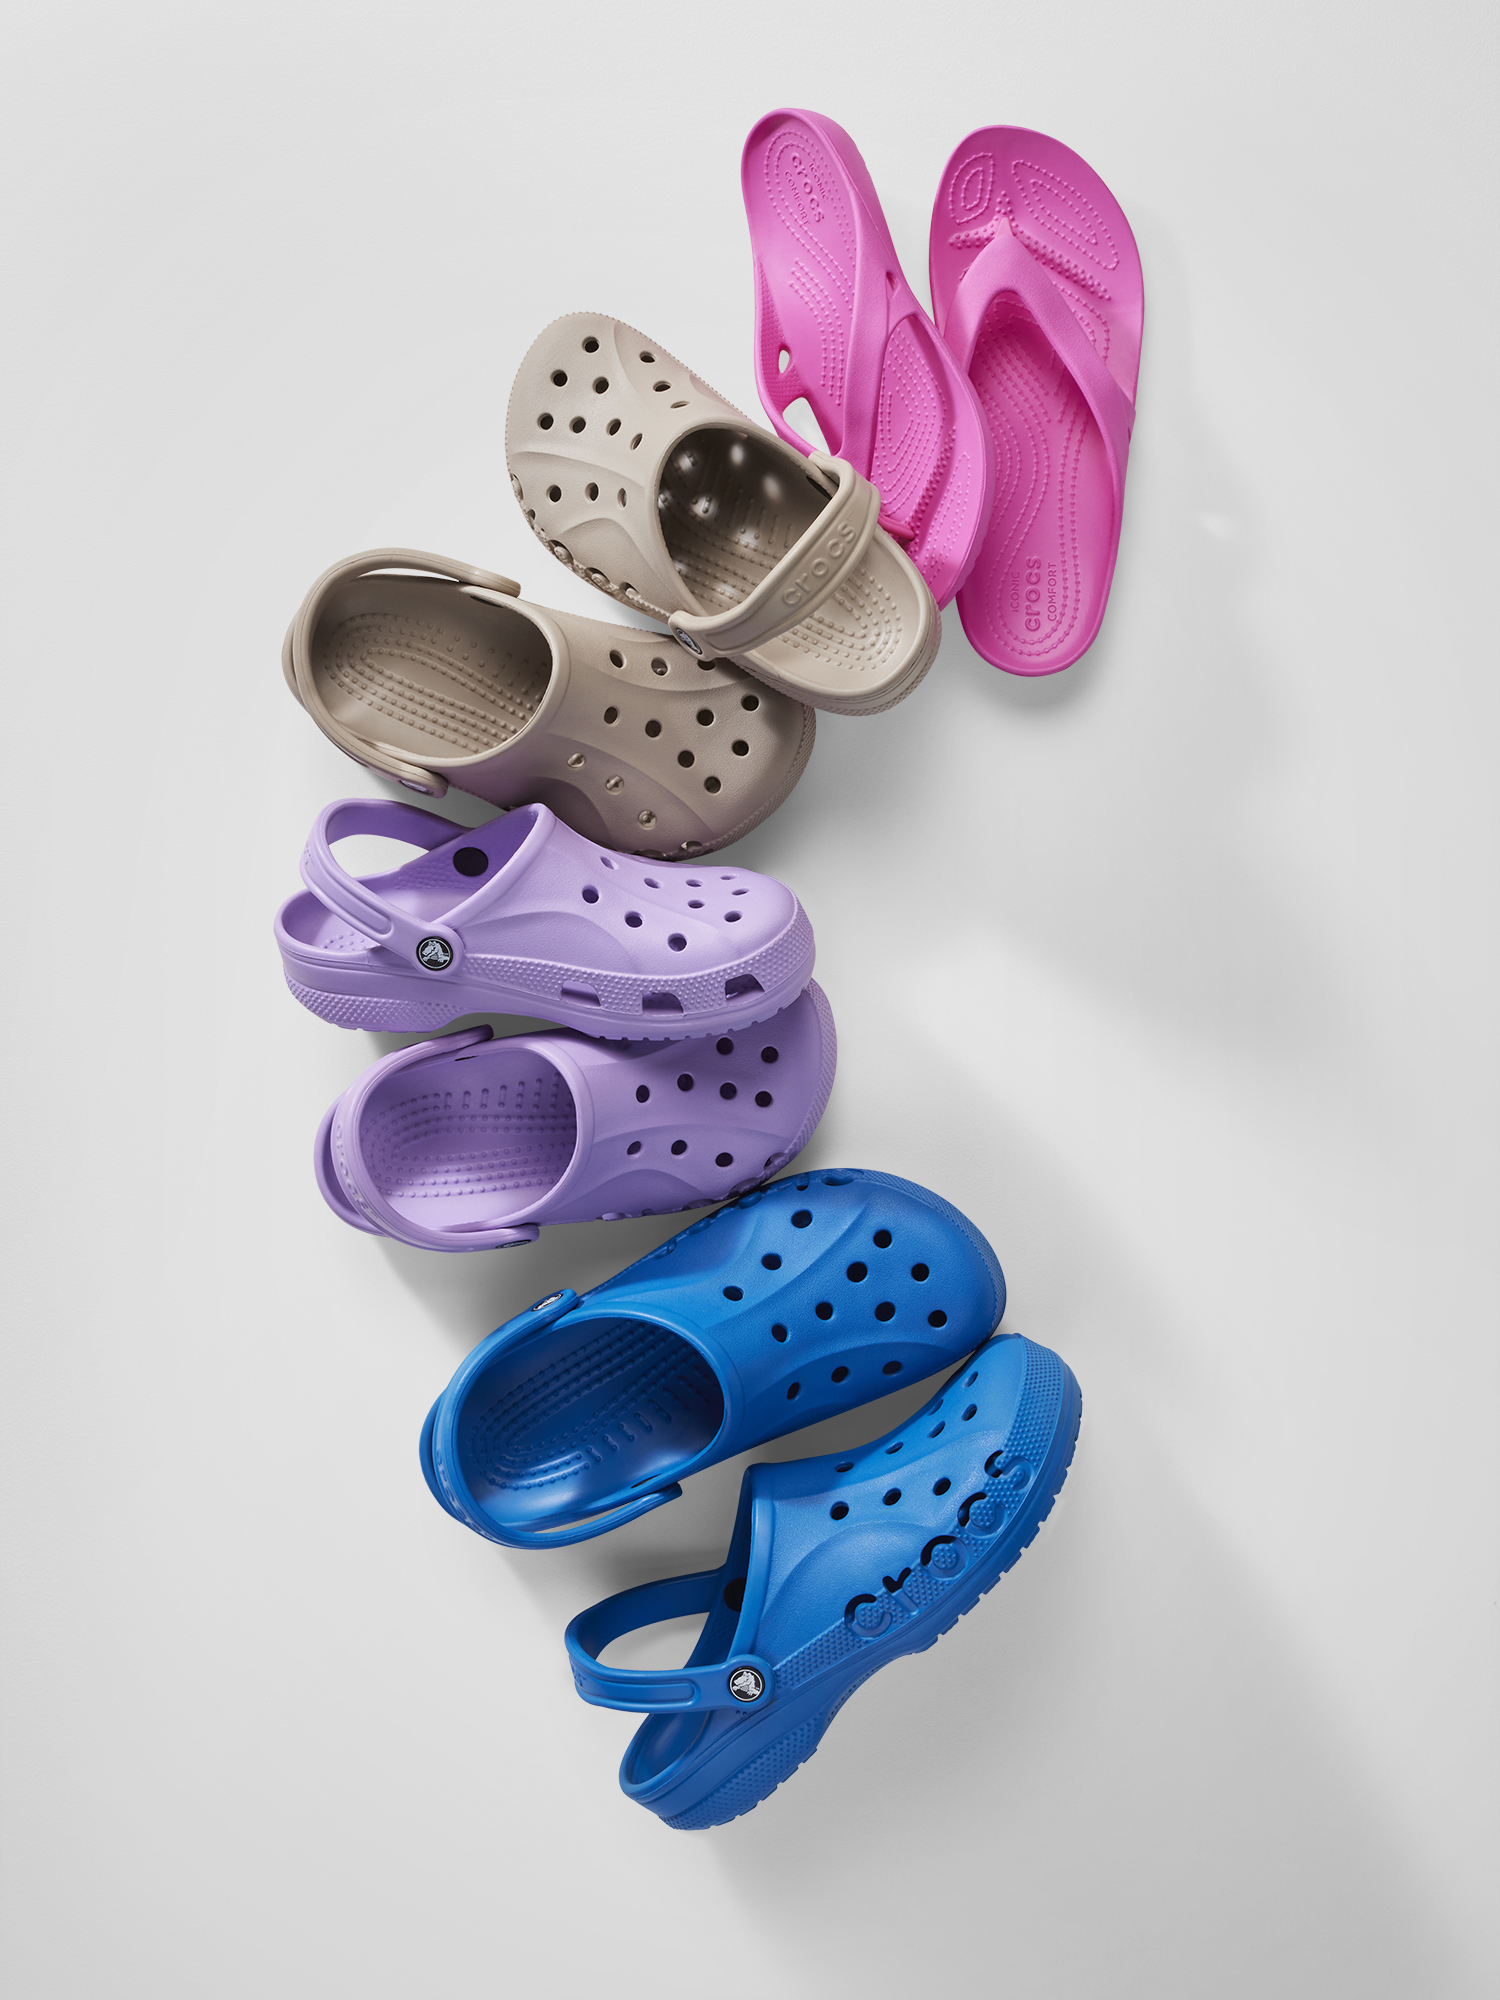 Crocs Men's and Women's Unisex Baya Clog Sandals - image 2 of 6